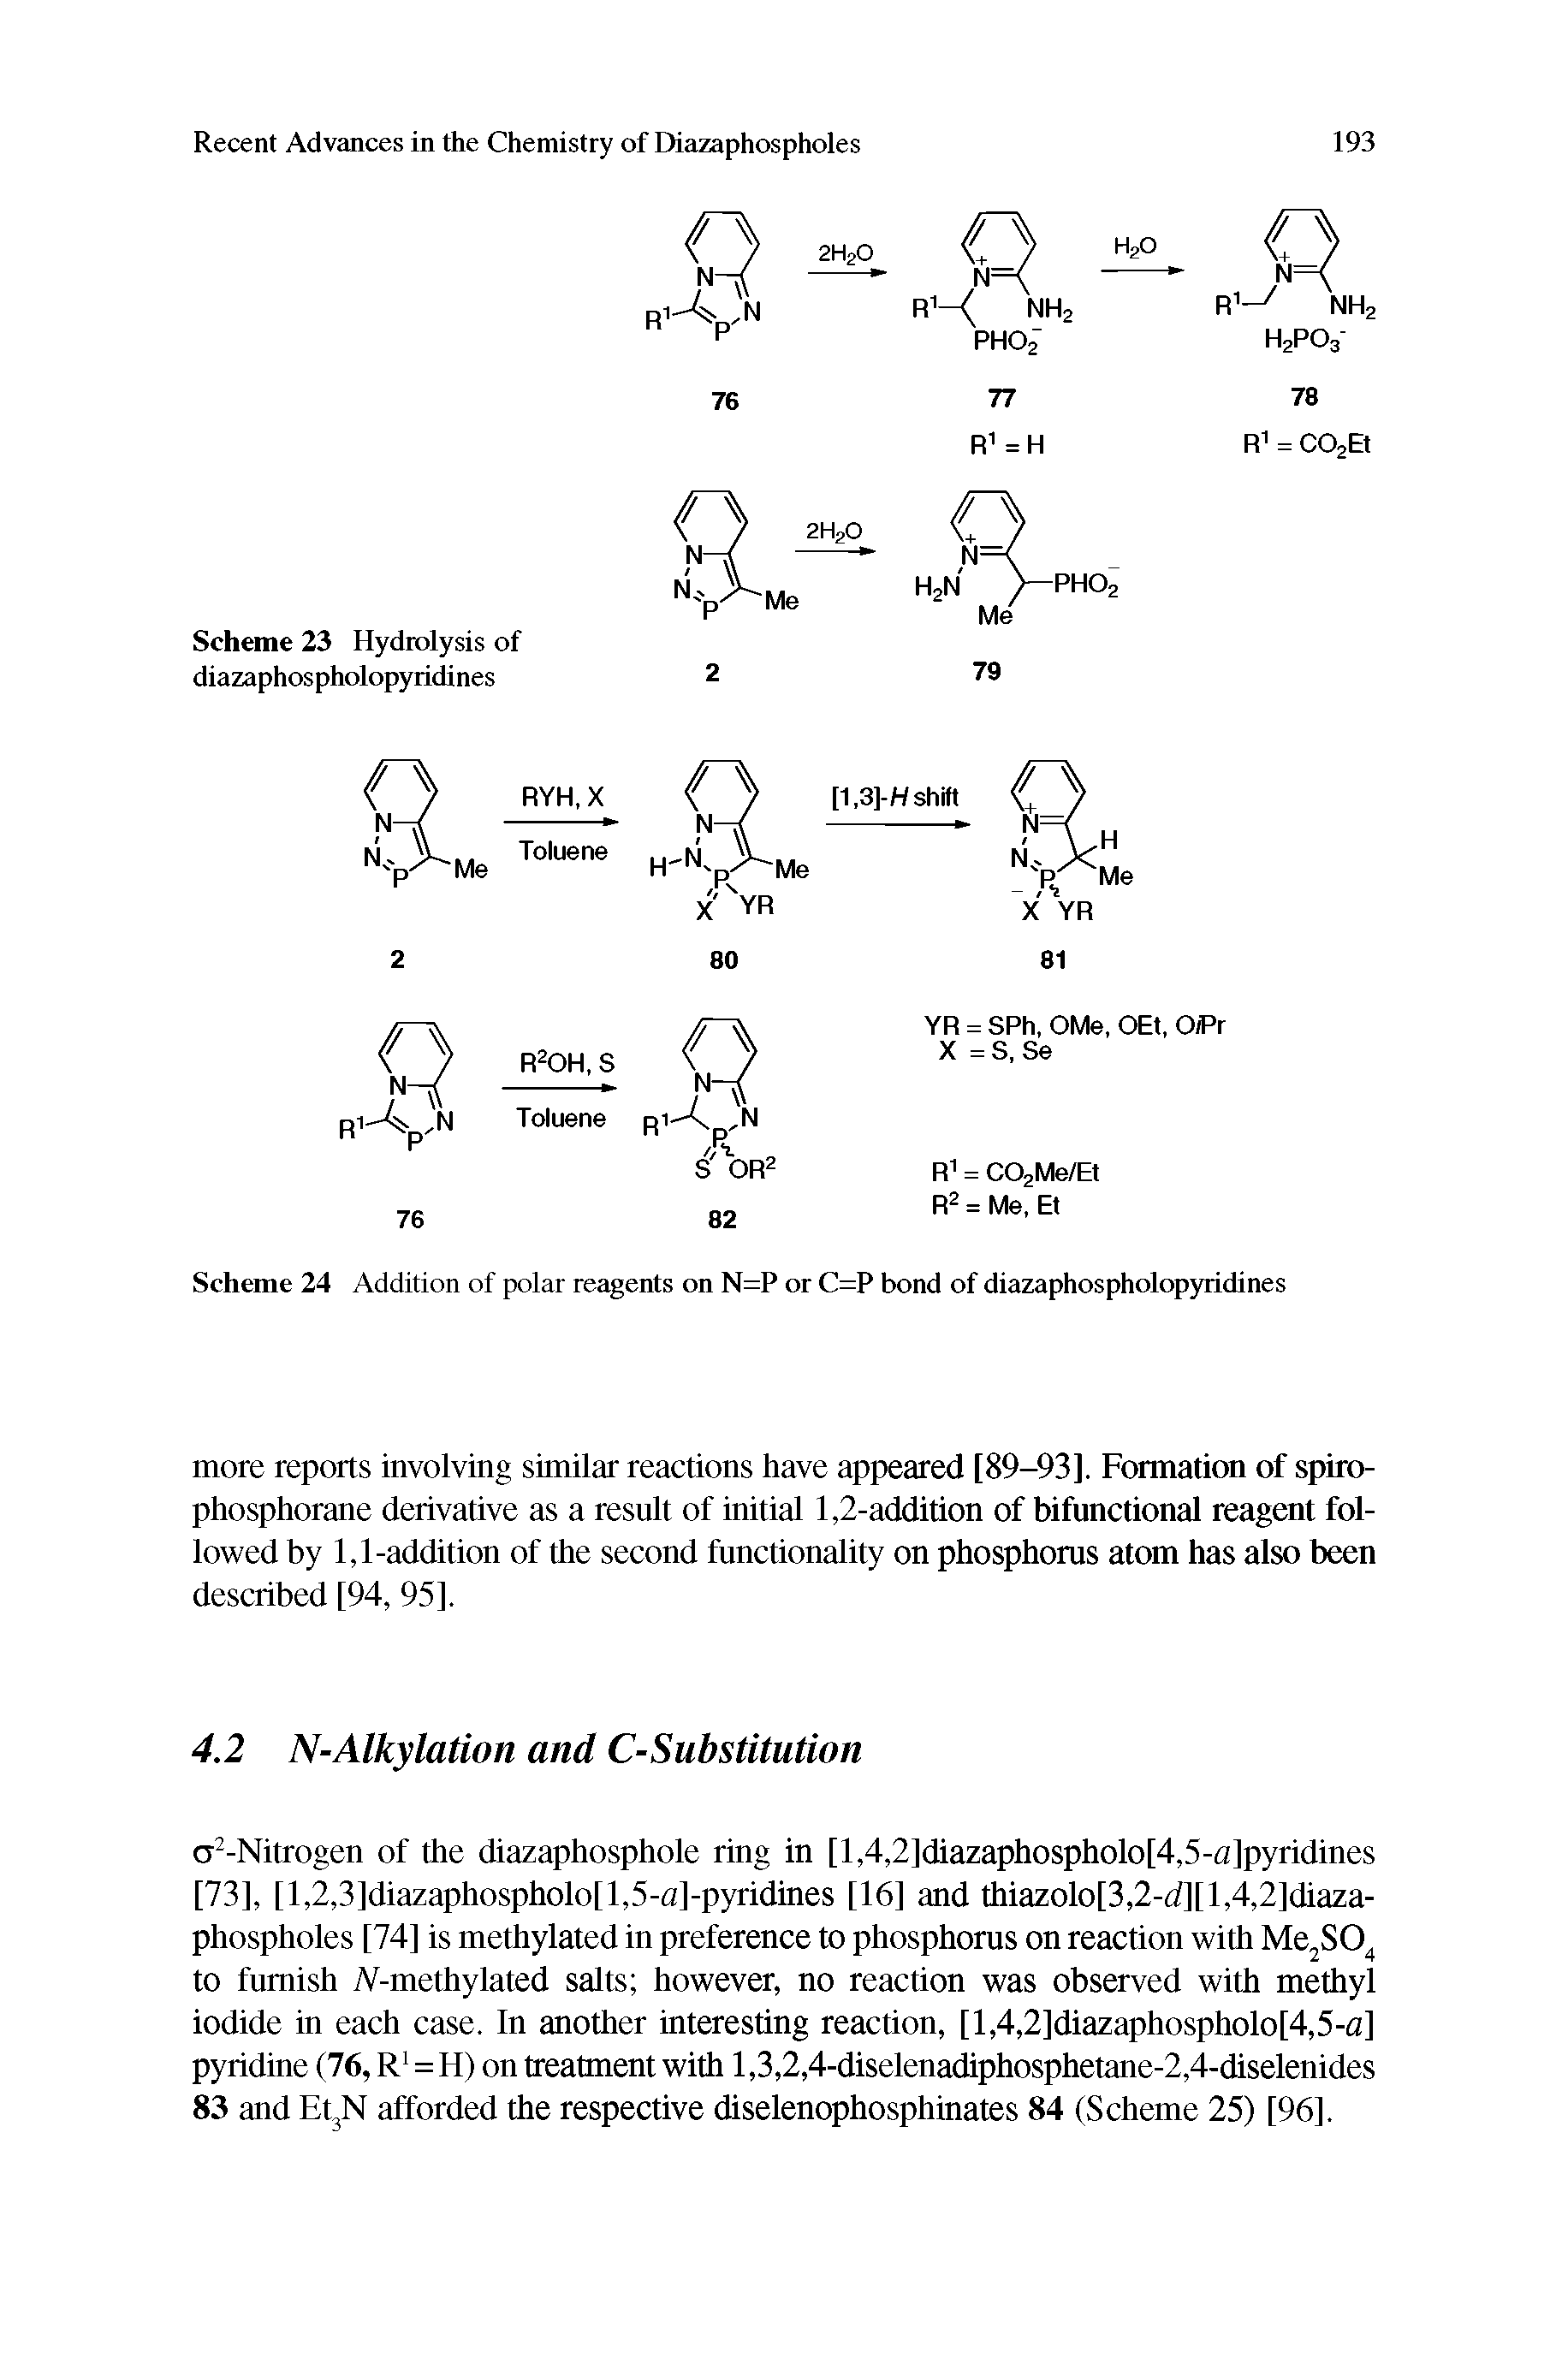 Scheme 24 Addition of polar reagents on N=P or C=P bond of diazaphospholopyridines...